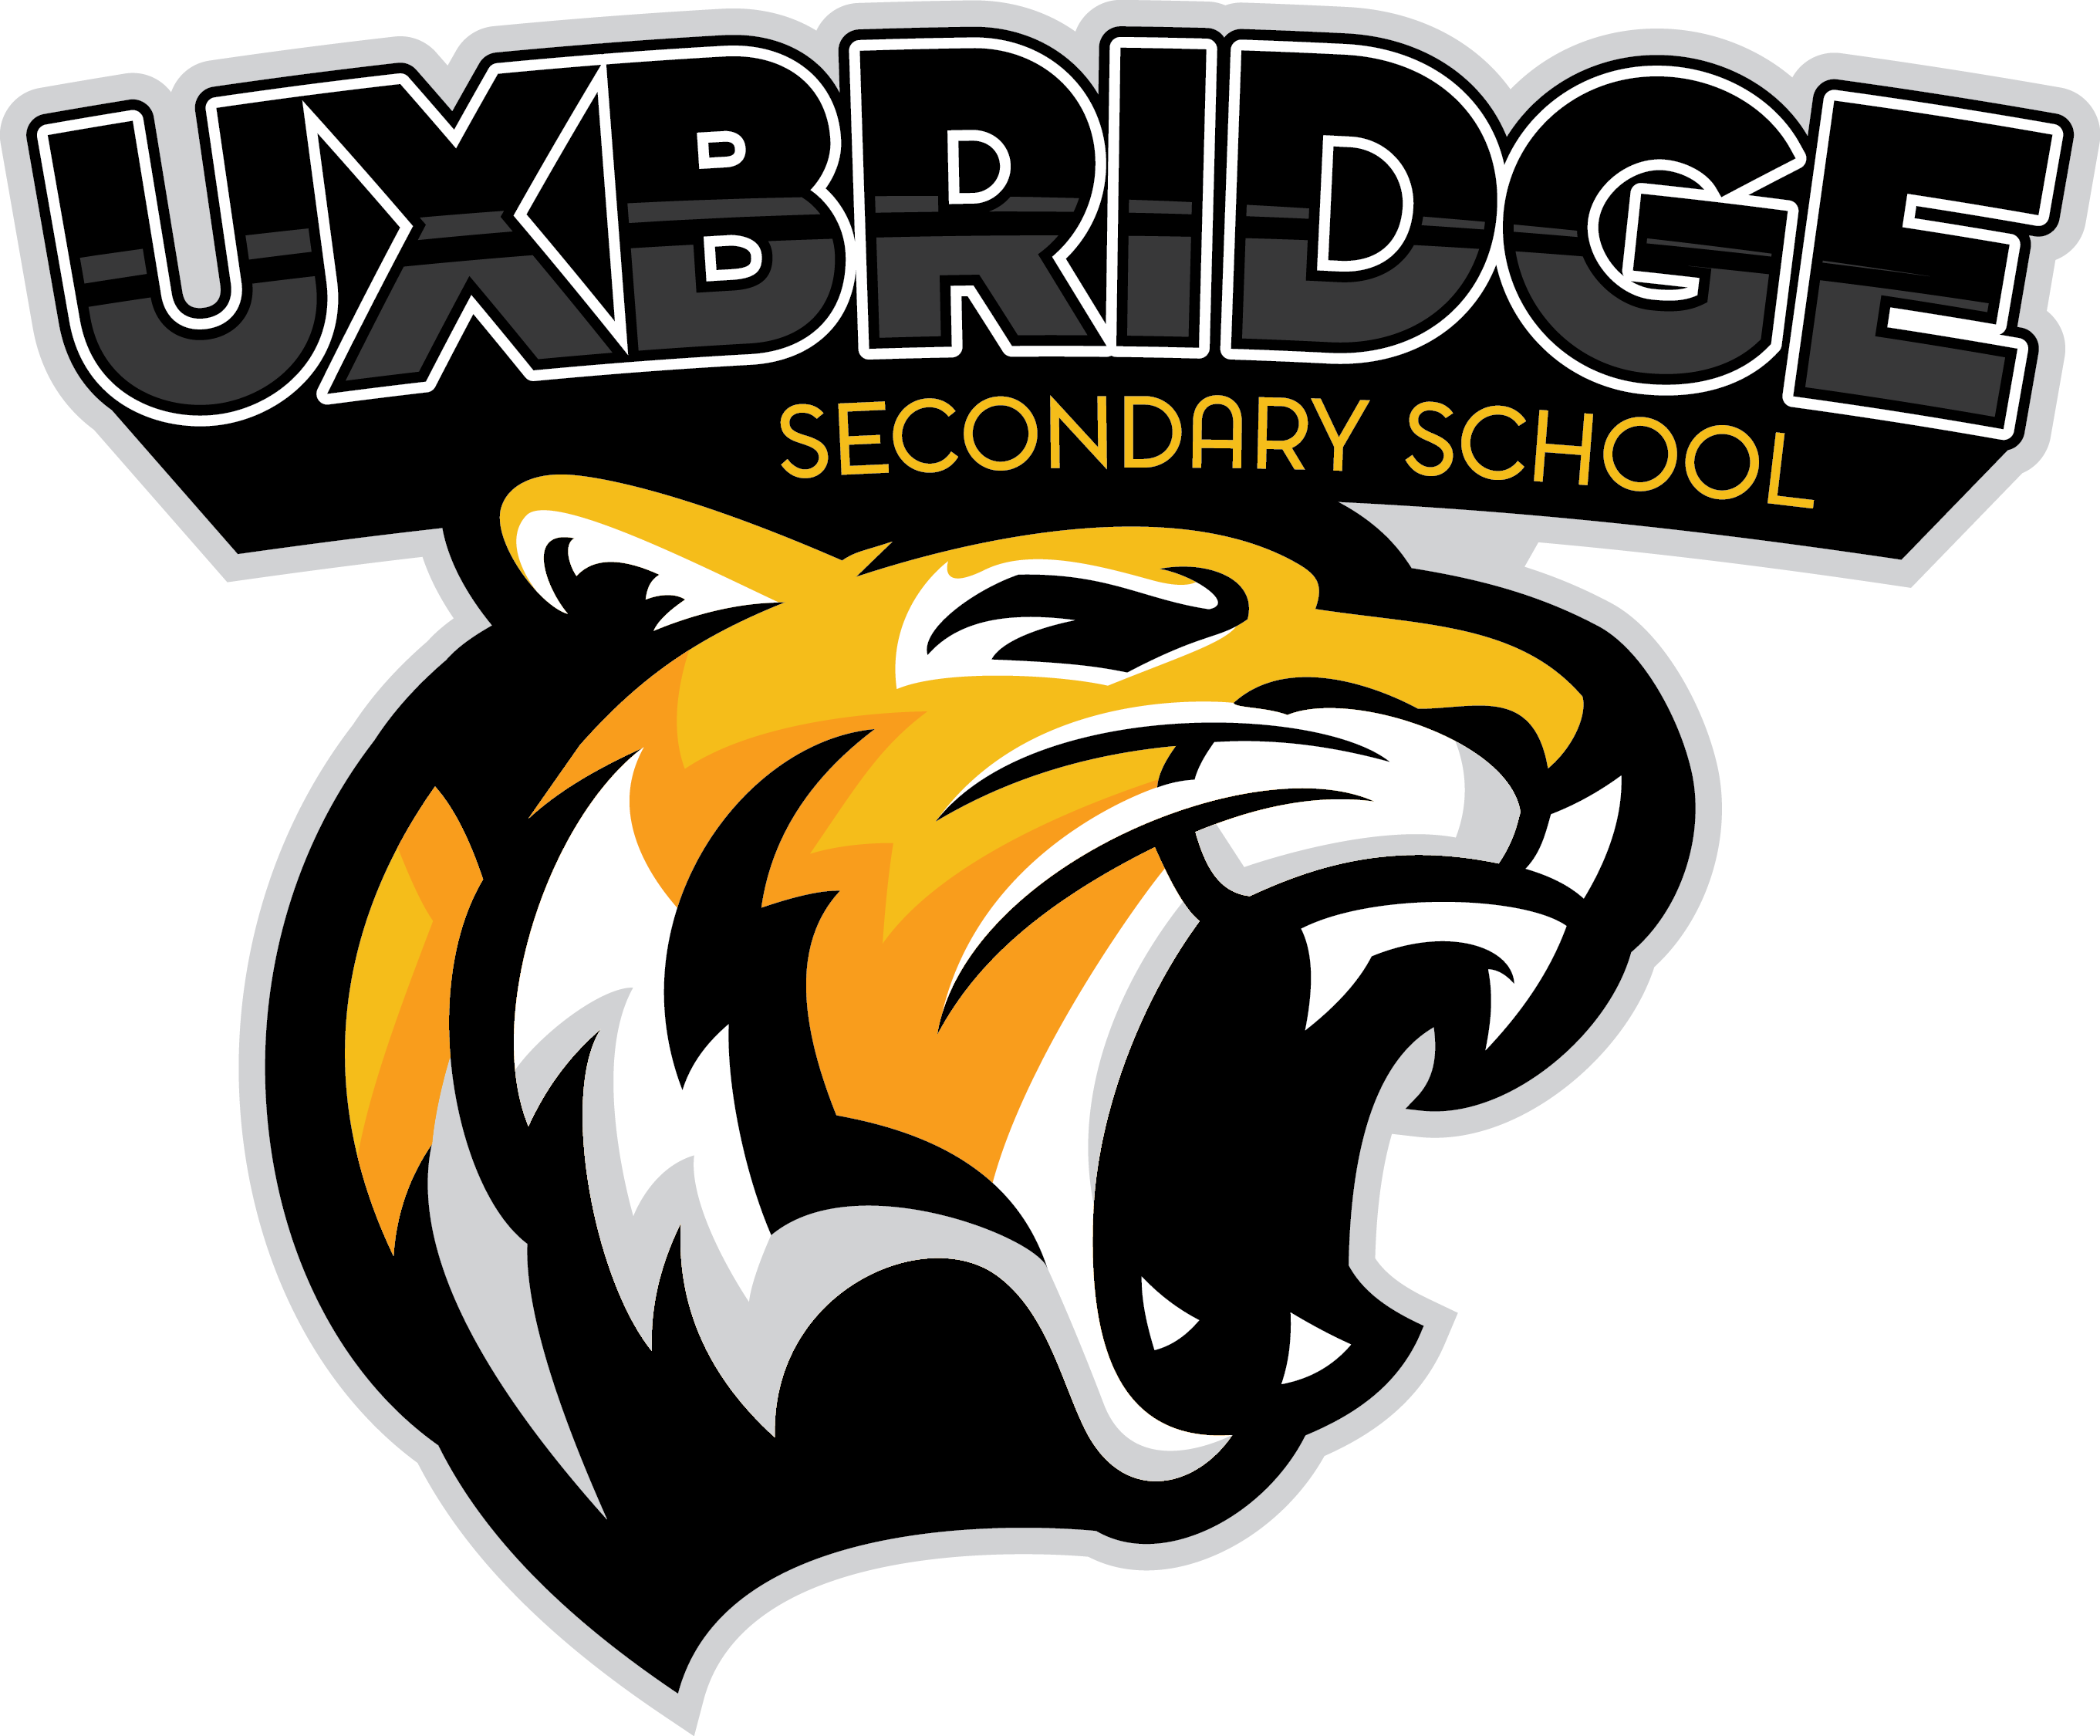 Uxbridge Secondary School logo